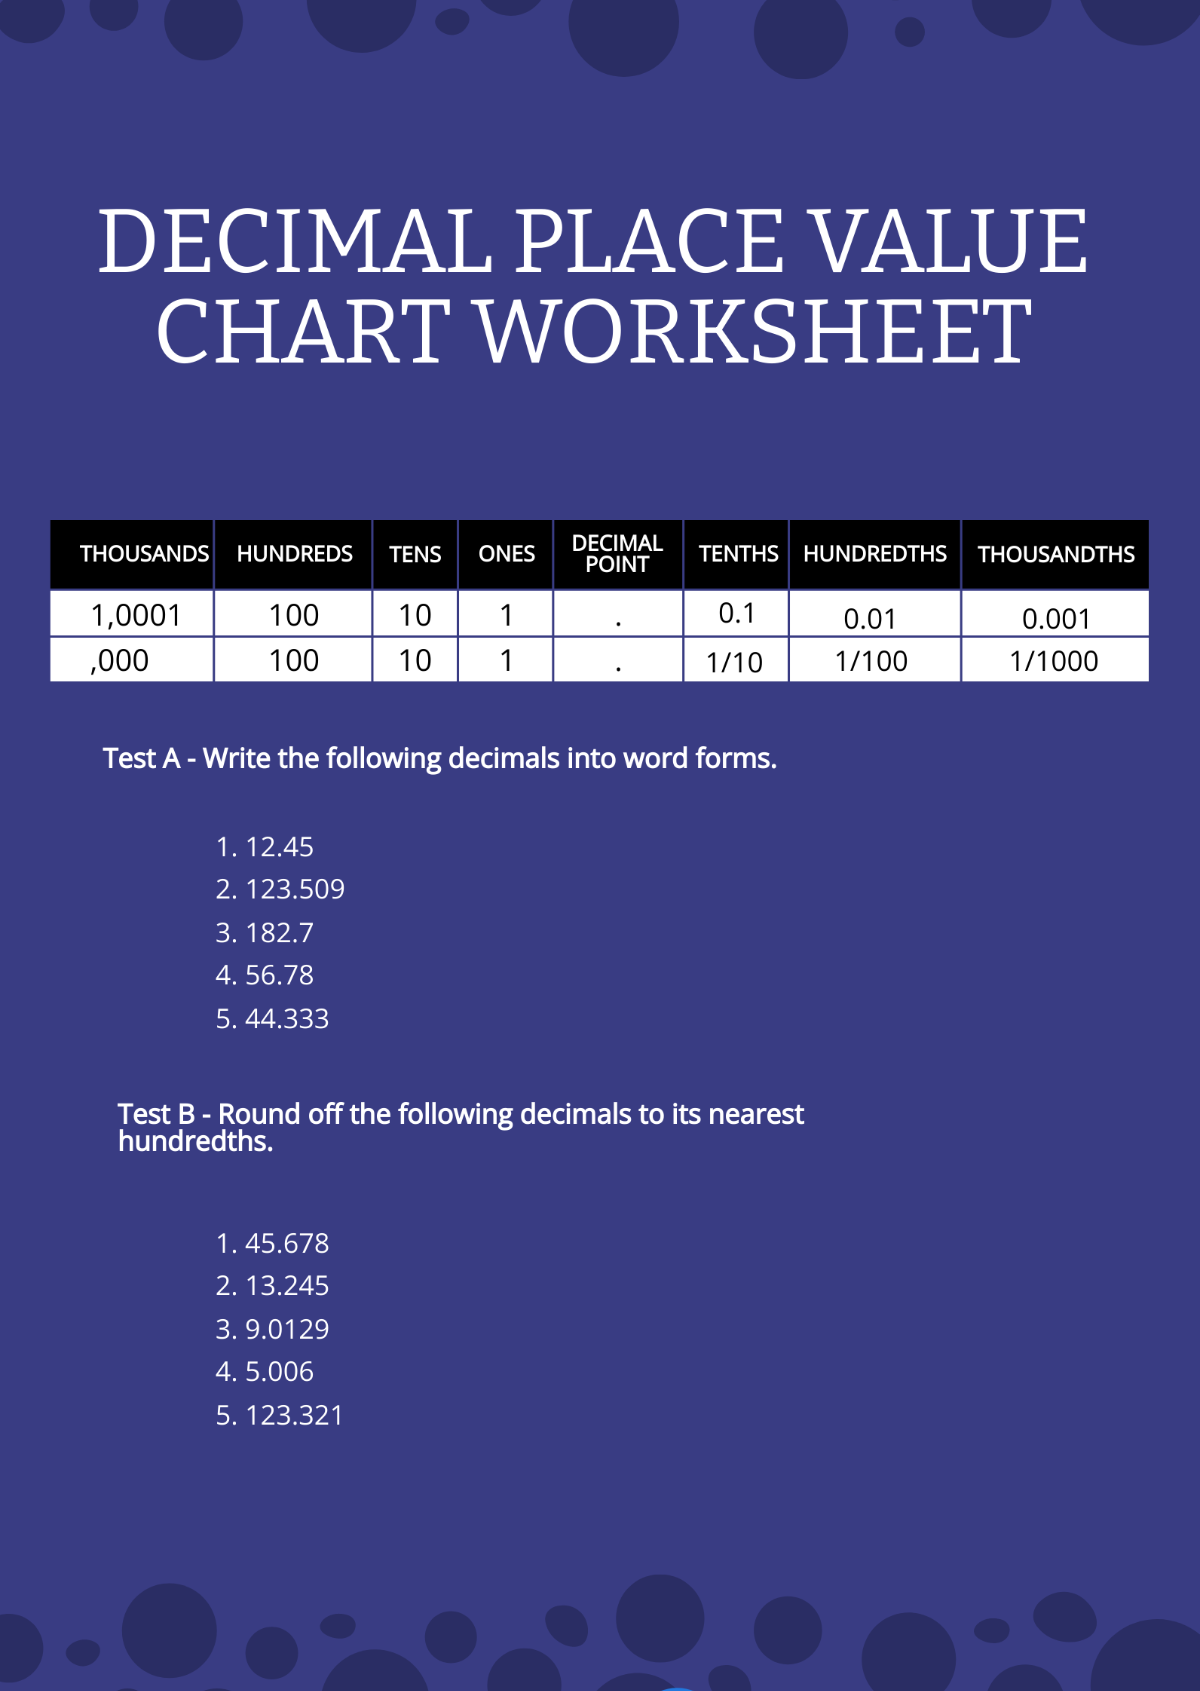 Decimal Place Value Chart Worksheet Template